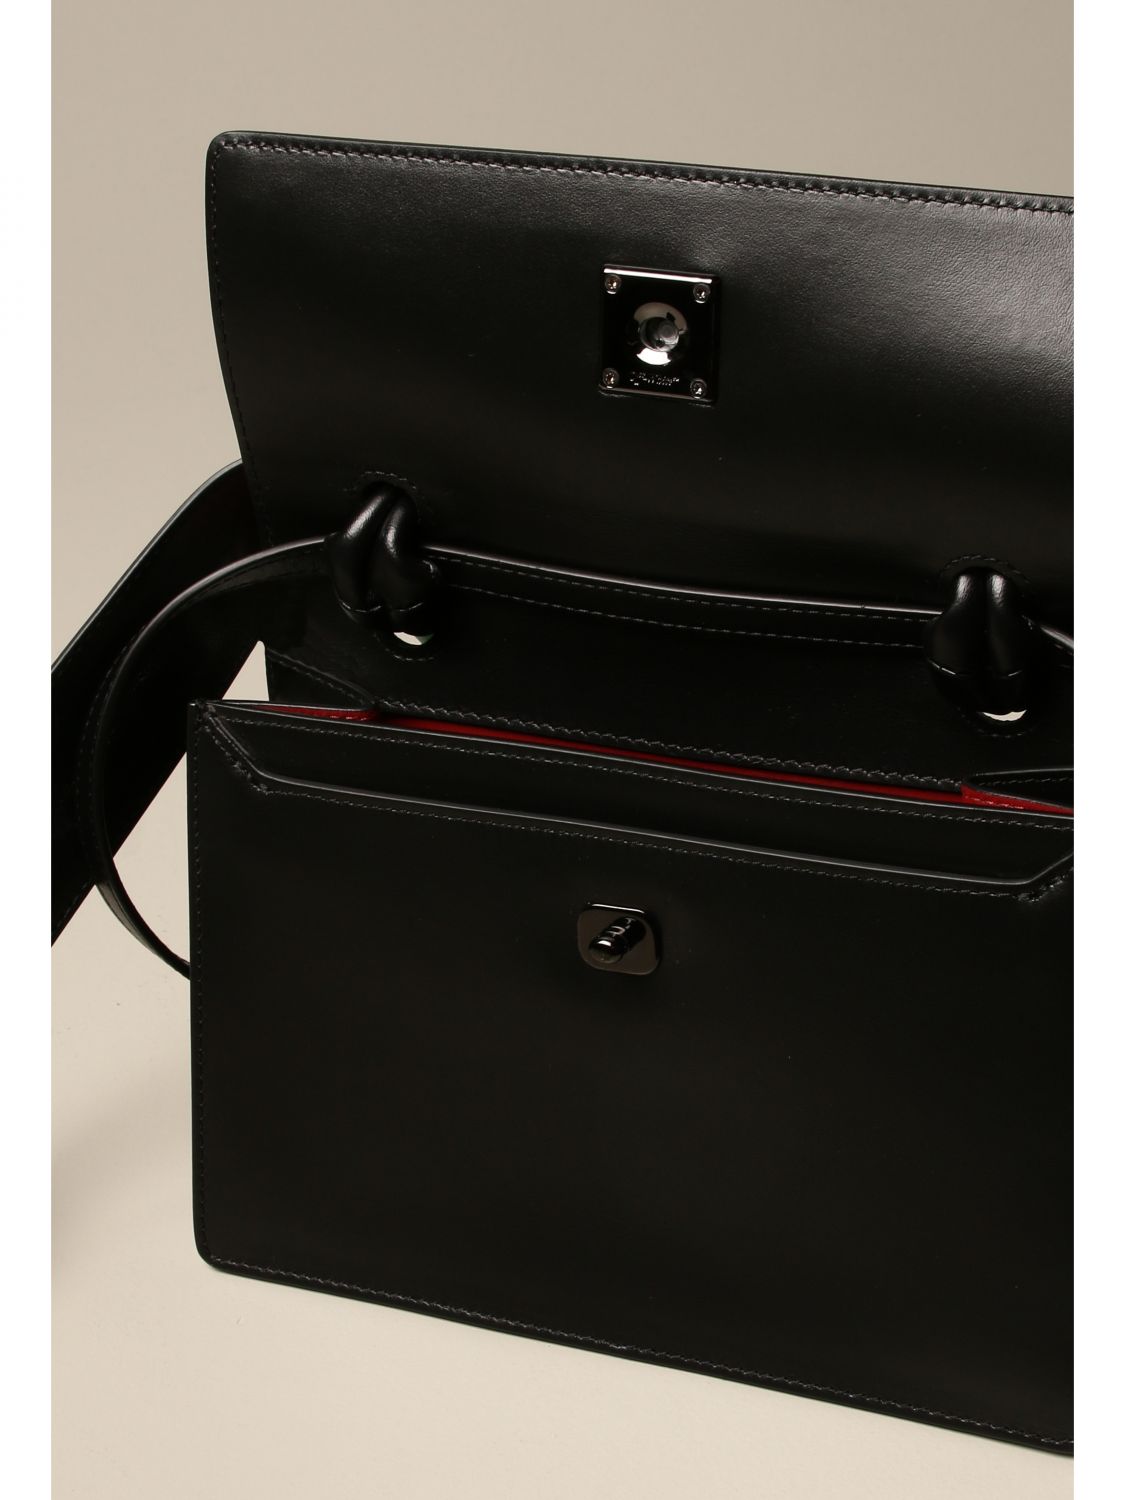 Jitney 1.4 leather handbag Off-White Orange in Leather - 30601762